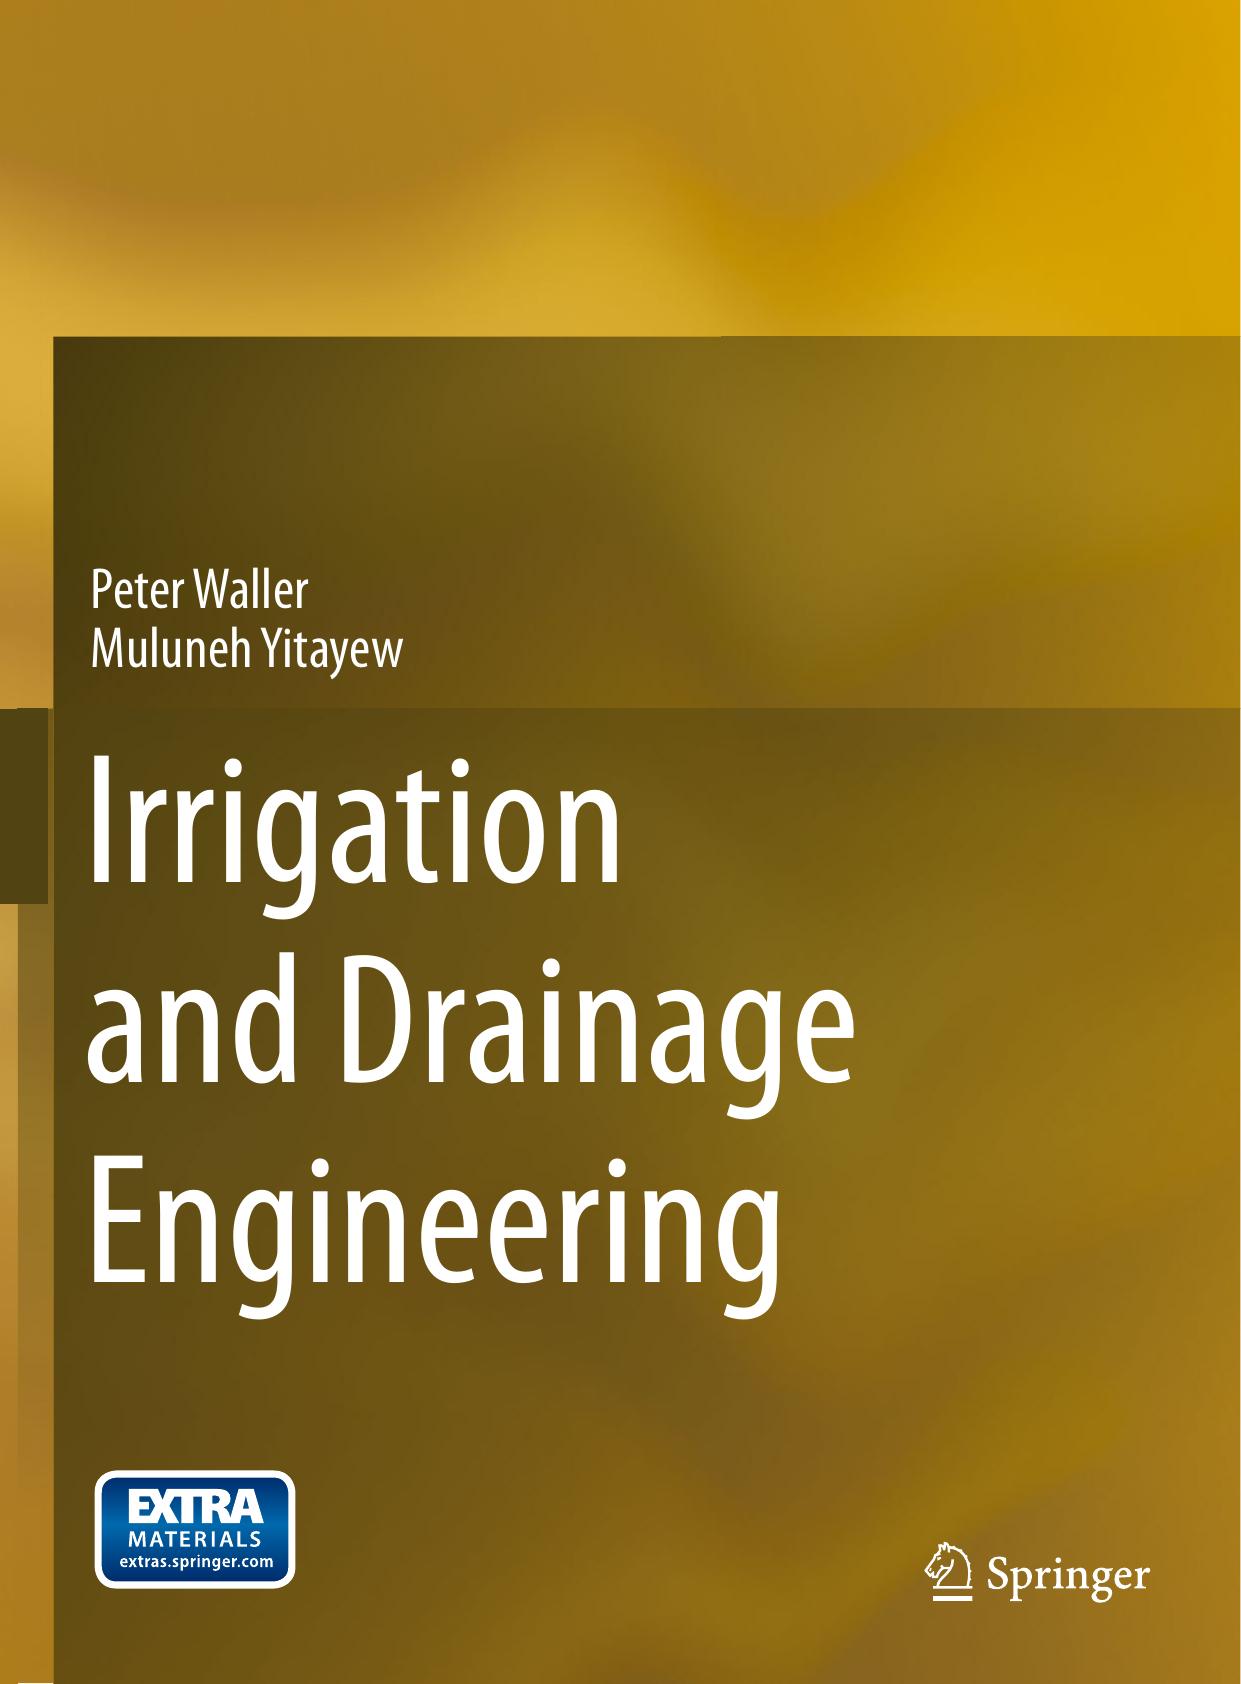 Irrigation and drainage engineering  2016